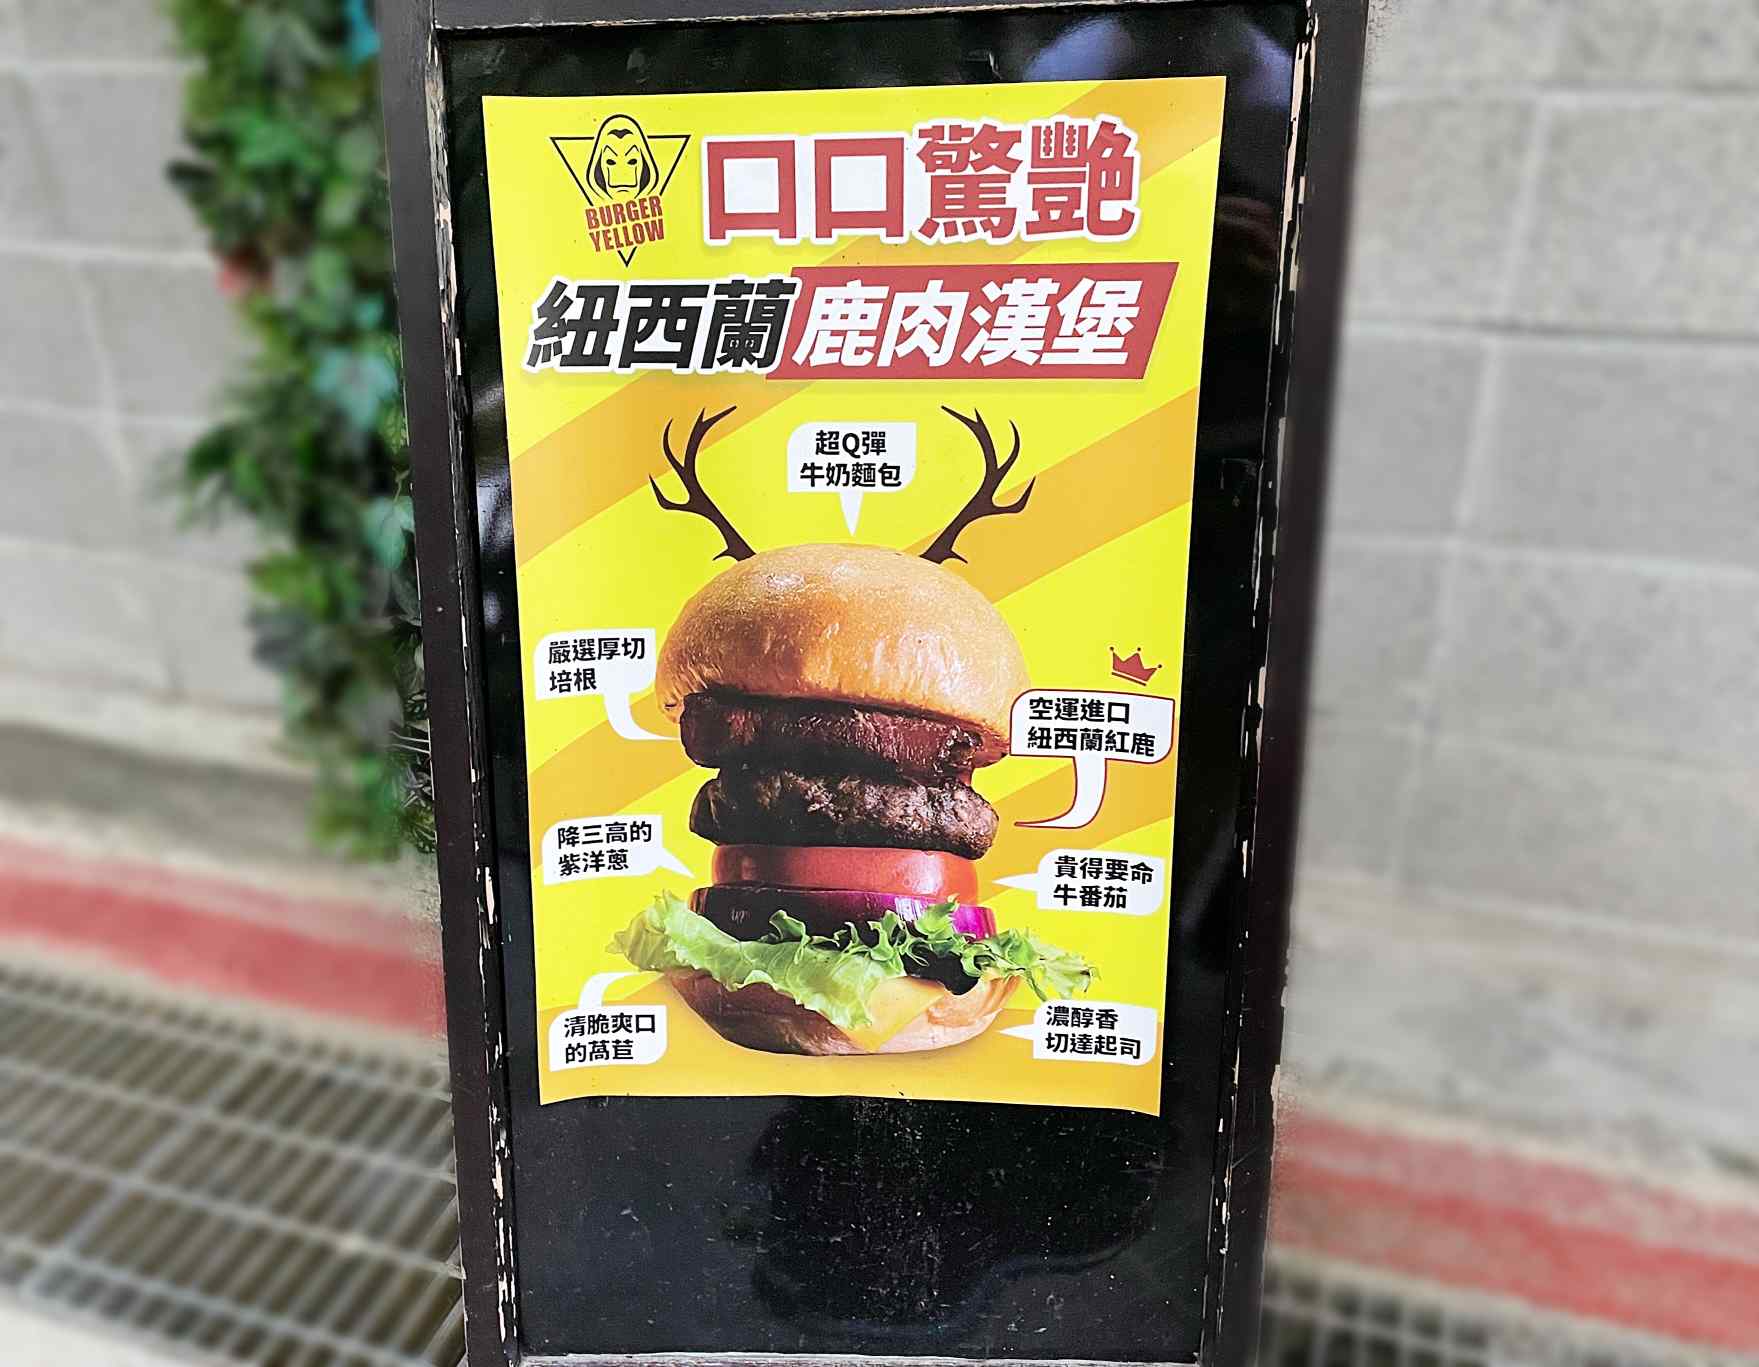 burger yellow, burger yellow 菜單, 台北車站美食, 鹿肉漢堡